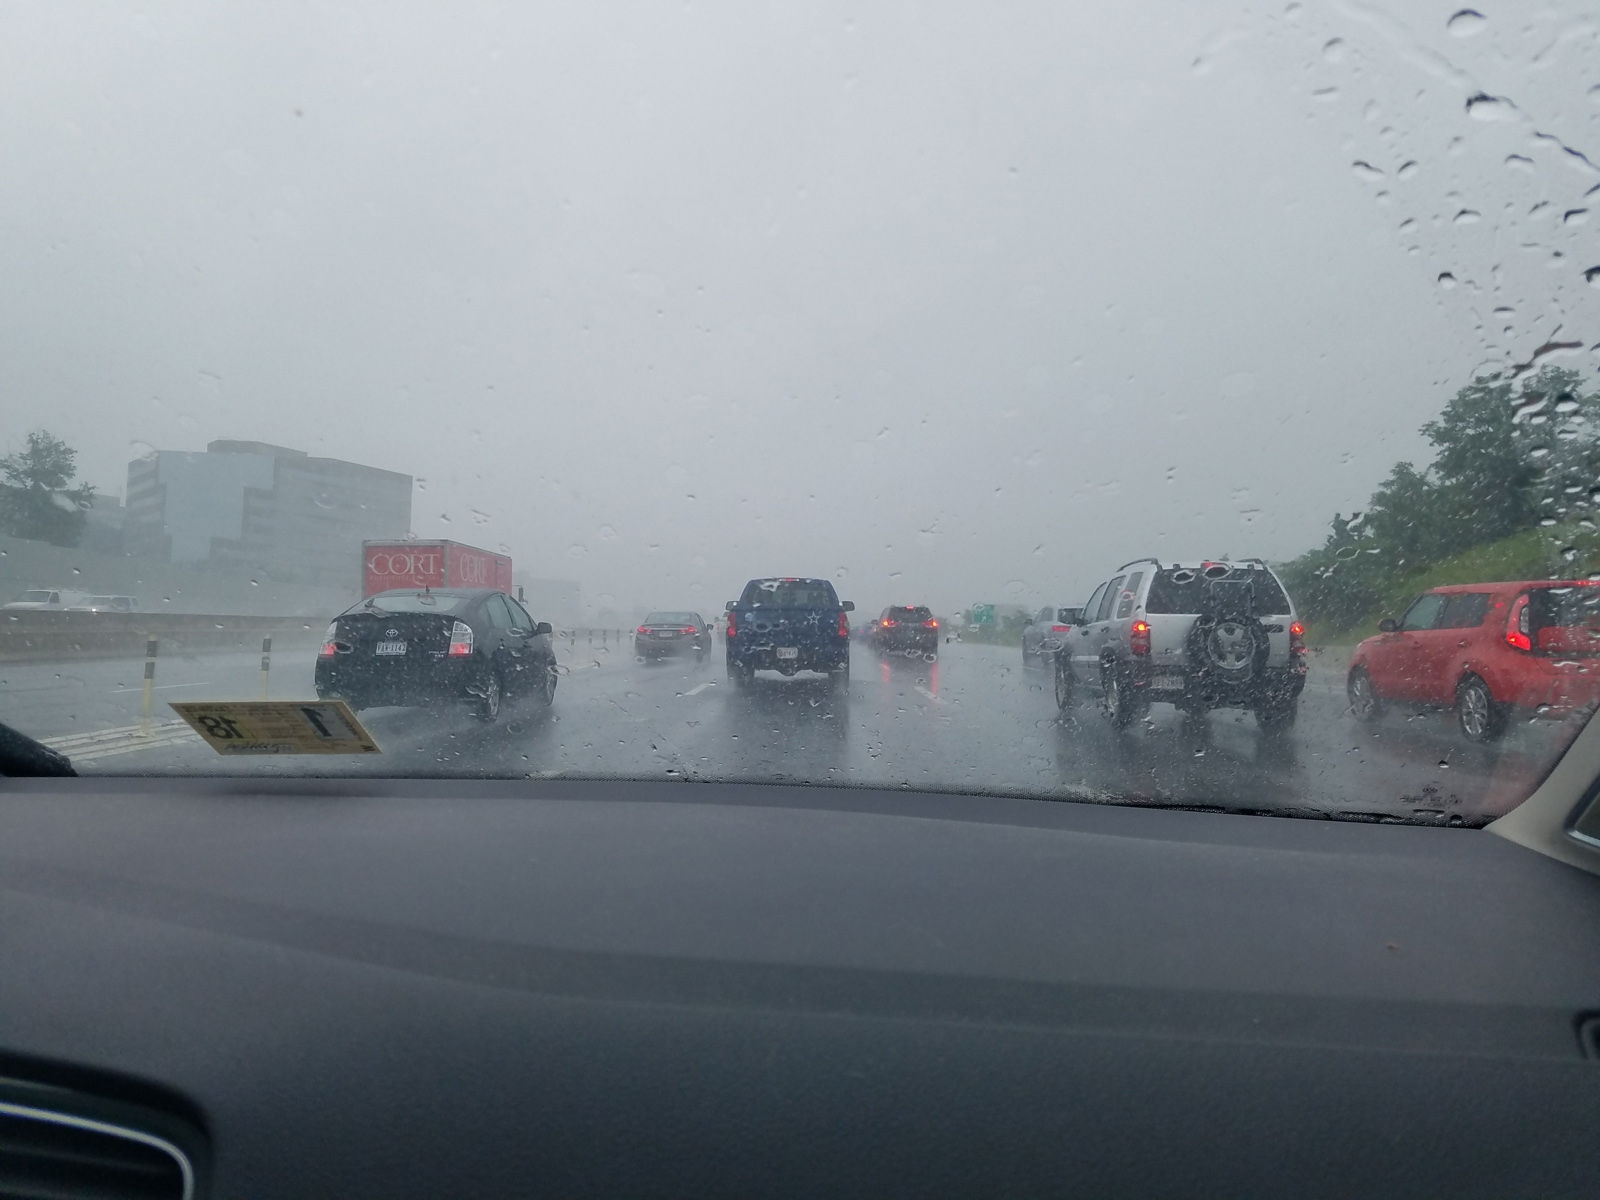 Traffic on Interstate 495 near Exit 47 in Vienna, Virginia. (Courtesy Jean Donaldson)